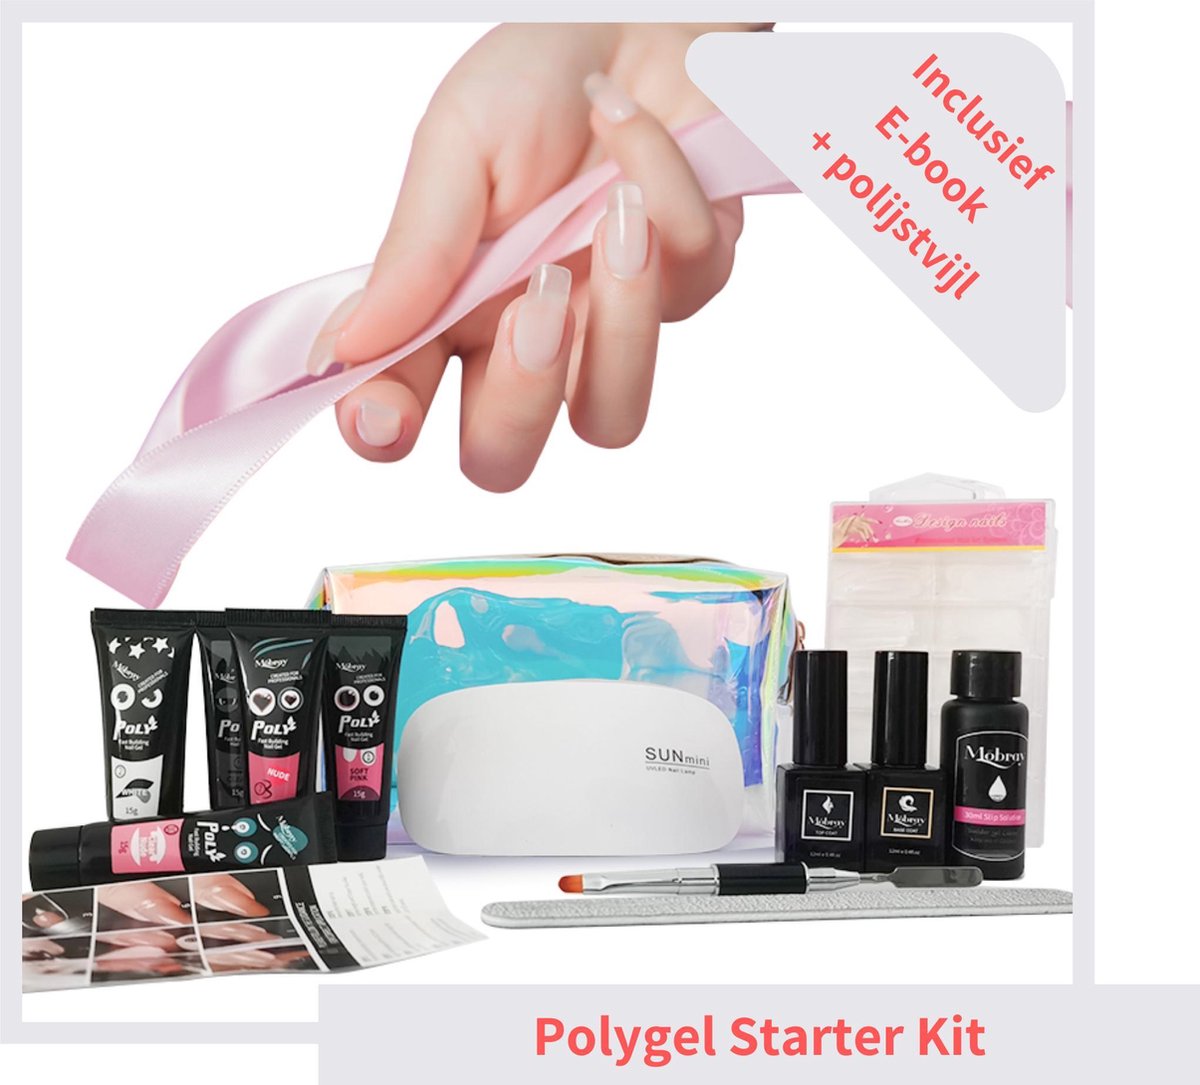 Polygel Kit - Polygel Nagels Starterspakket - Polygel Set - 6 kleuren - UV LED Lamp - Nagelverlenging - Manicure Set - Gel Nagellak - incl tasje - Mobray